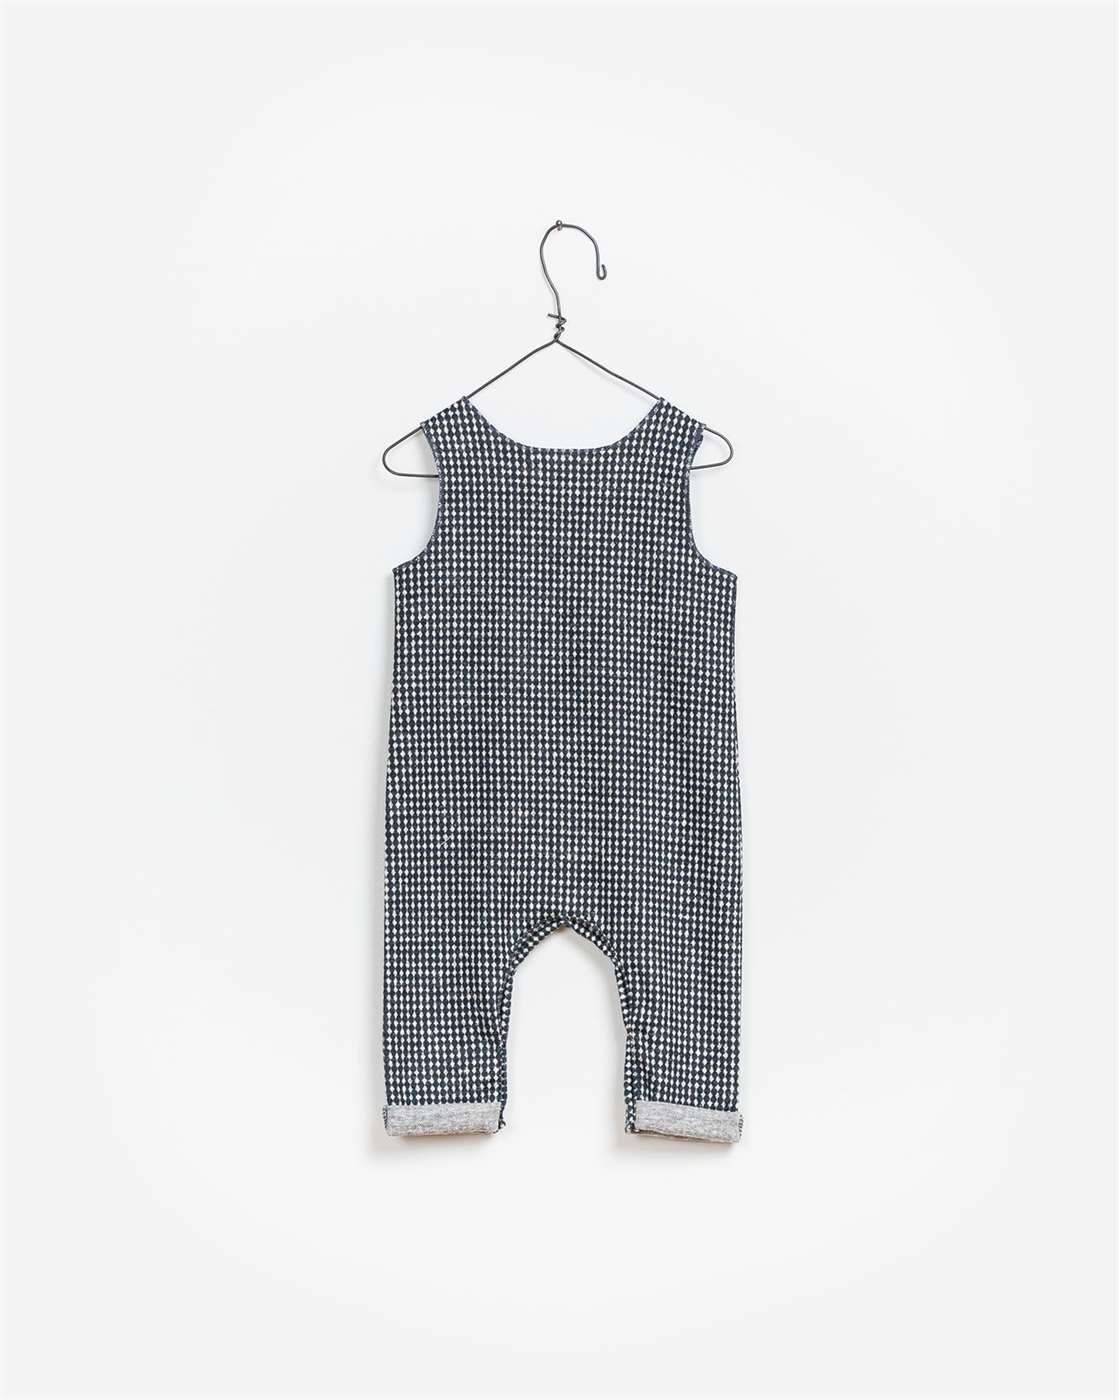 BeeBoo|BeeBoo PlayUp vêtements bébé baby clothes salopette overall Interlock gris grey 1